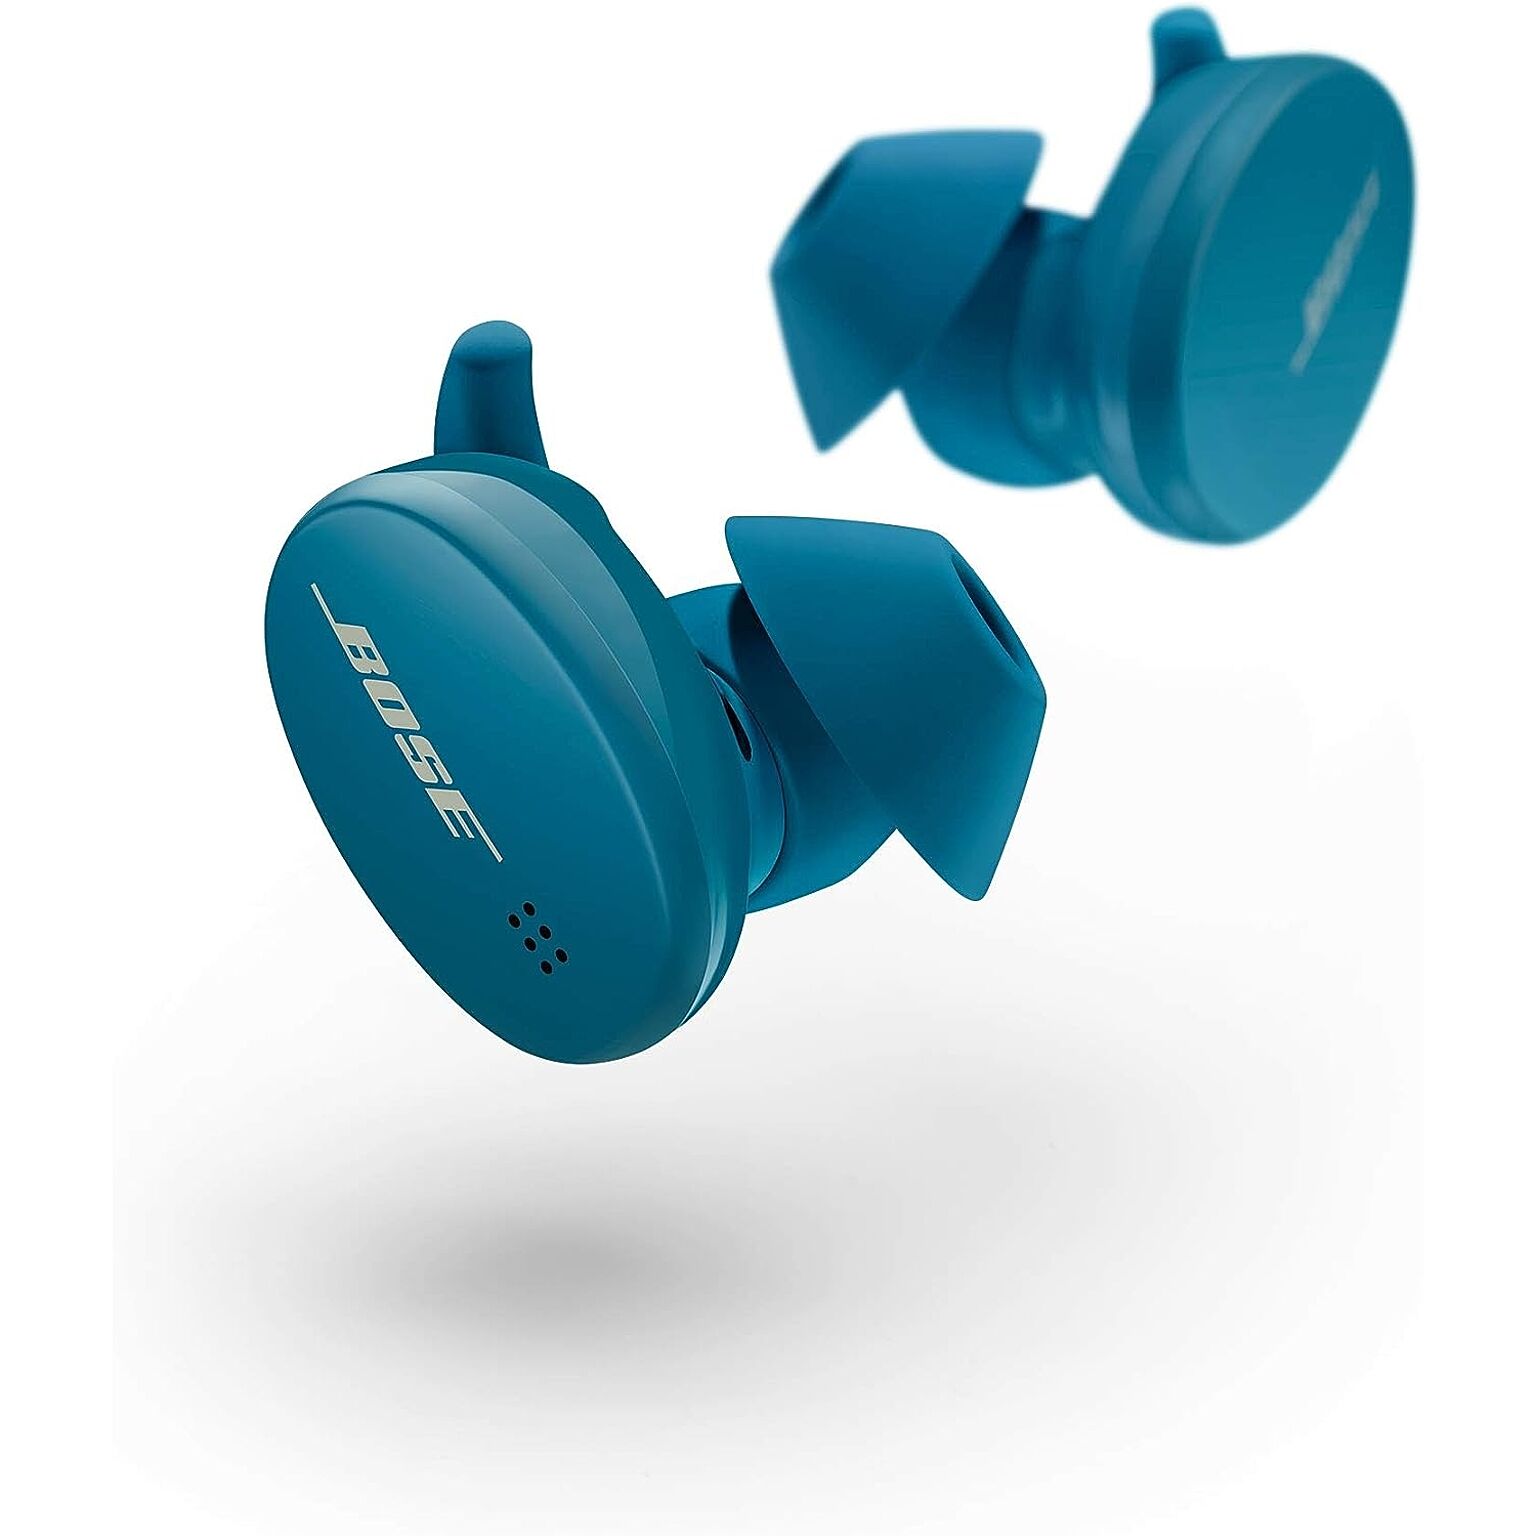 Bose Sport Earbuds Bluetooth Headphones - Baltic Blue